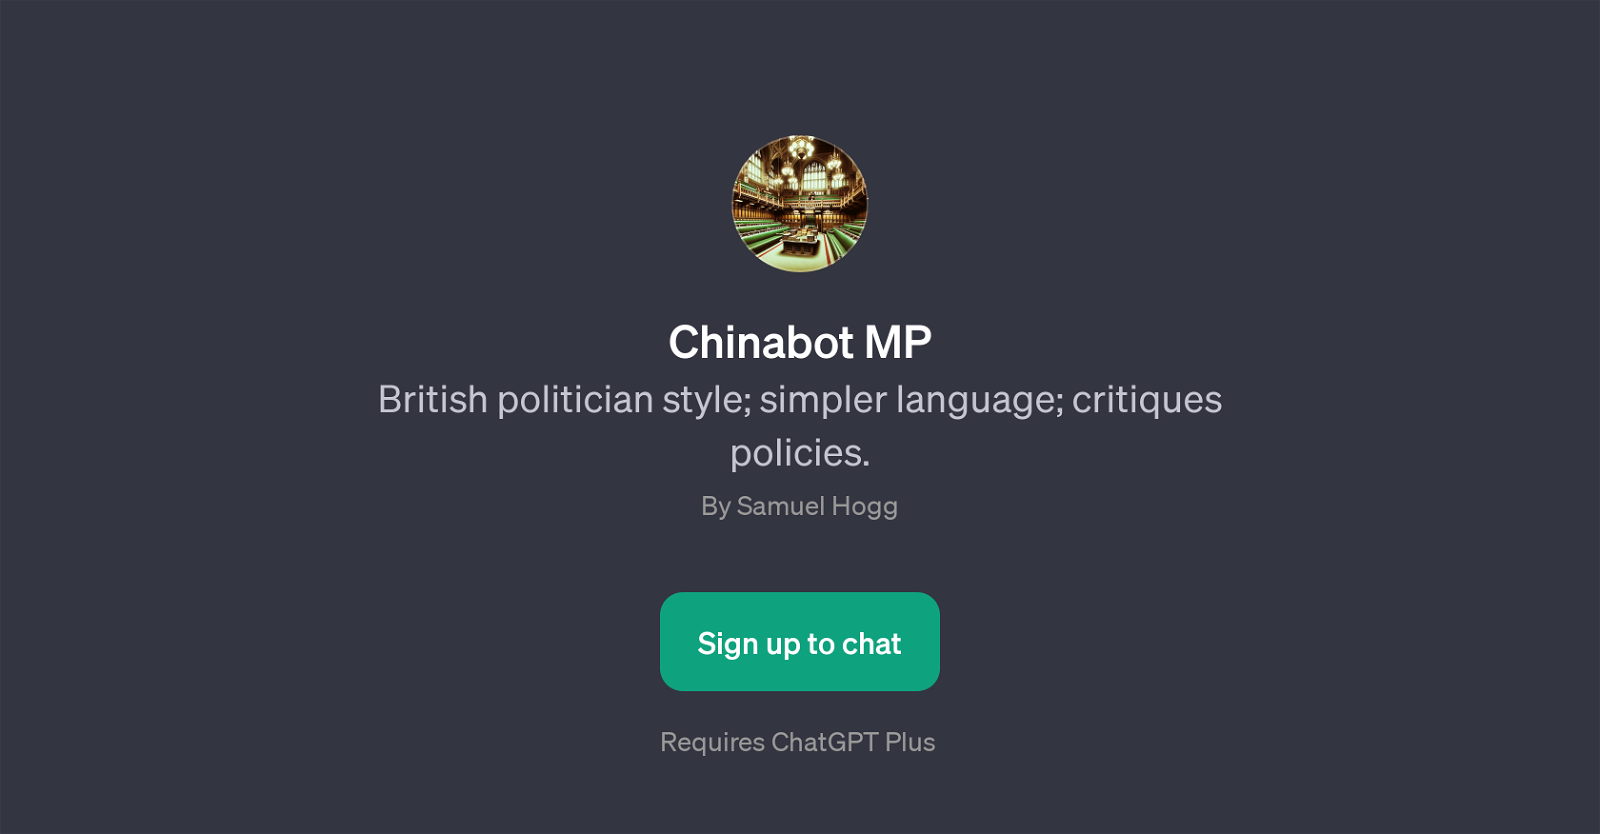 Chinabot MP website